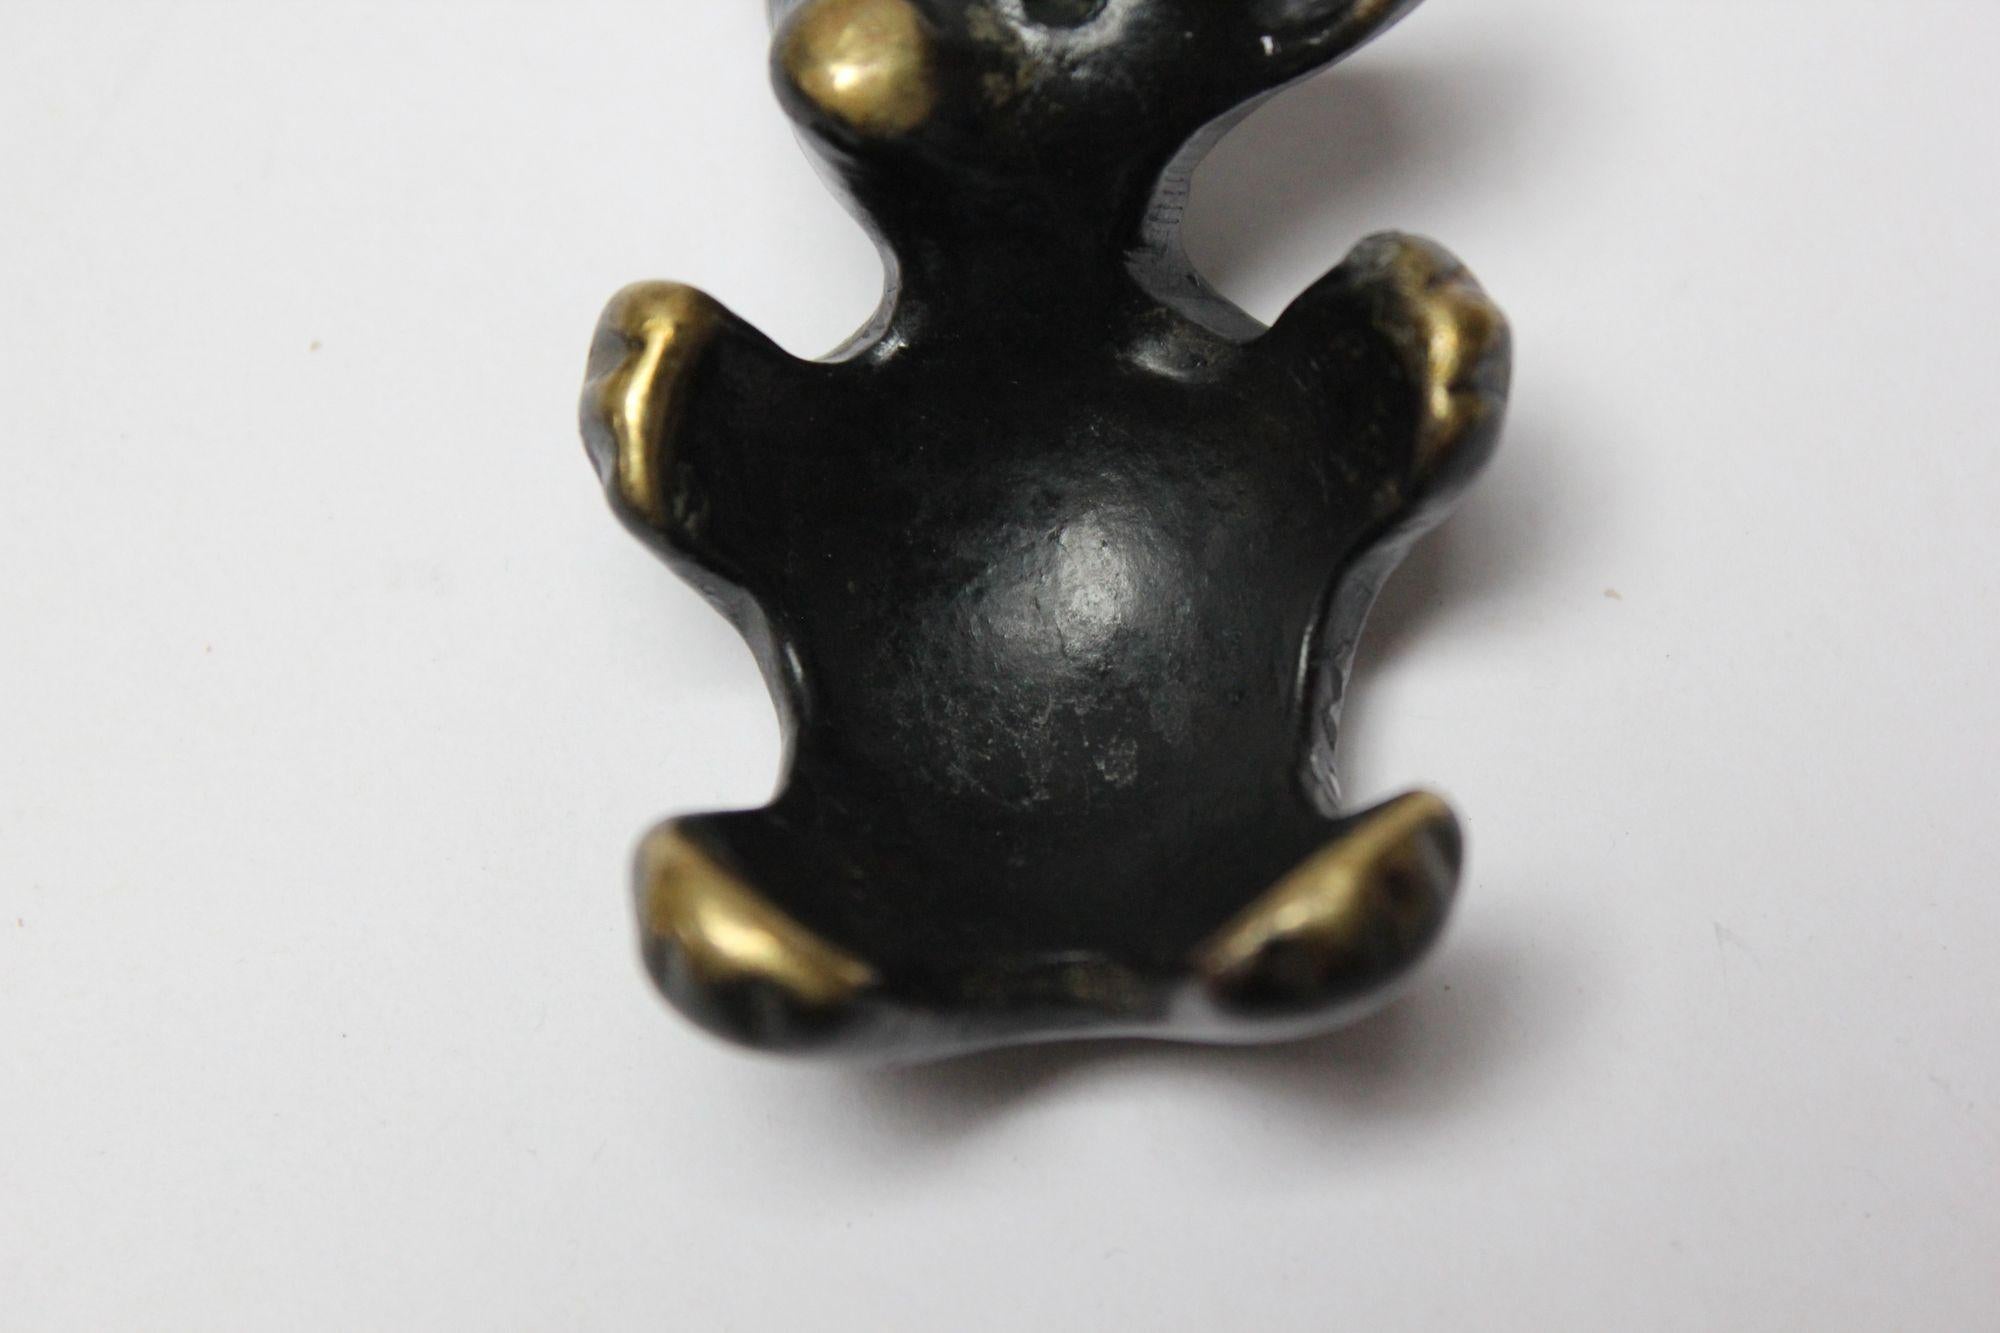 Blackened Brass Bear Candleholder/Figurine by Walter Bosse and Herta Baller For Sale 3